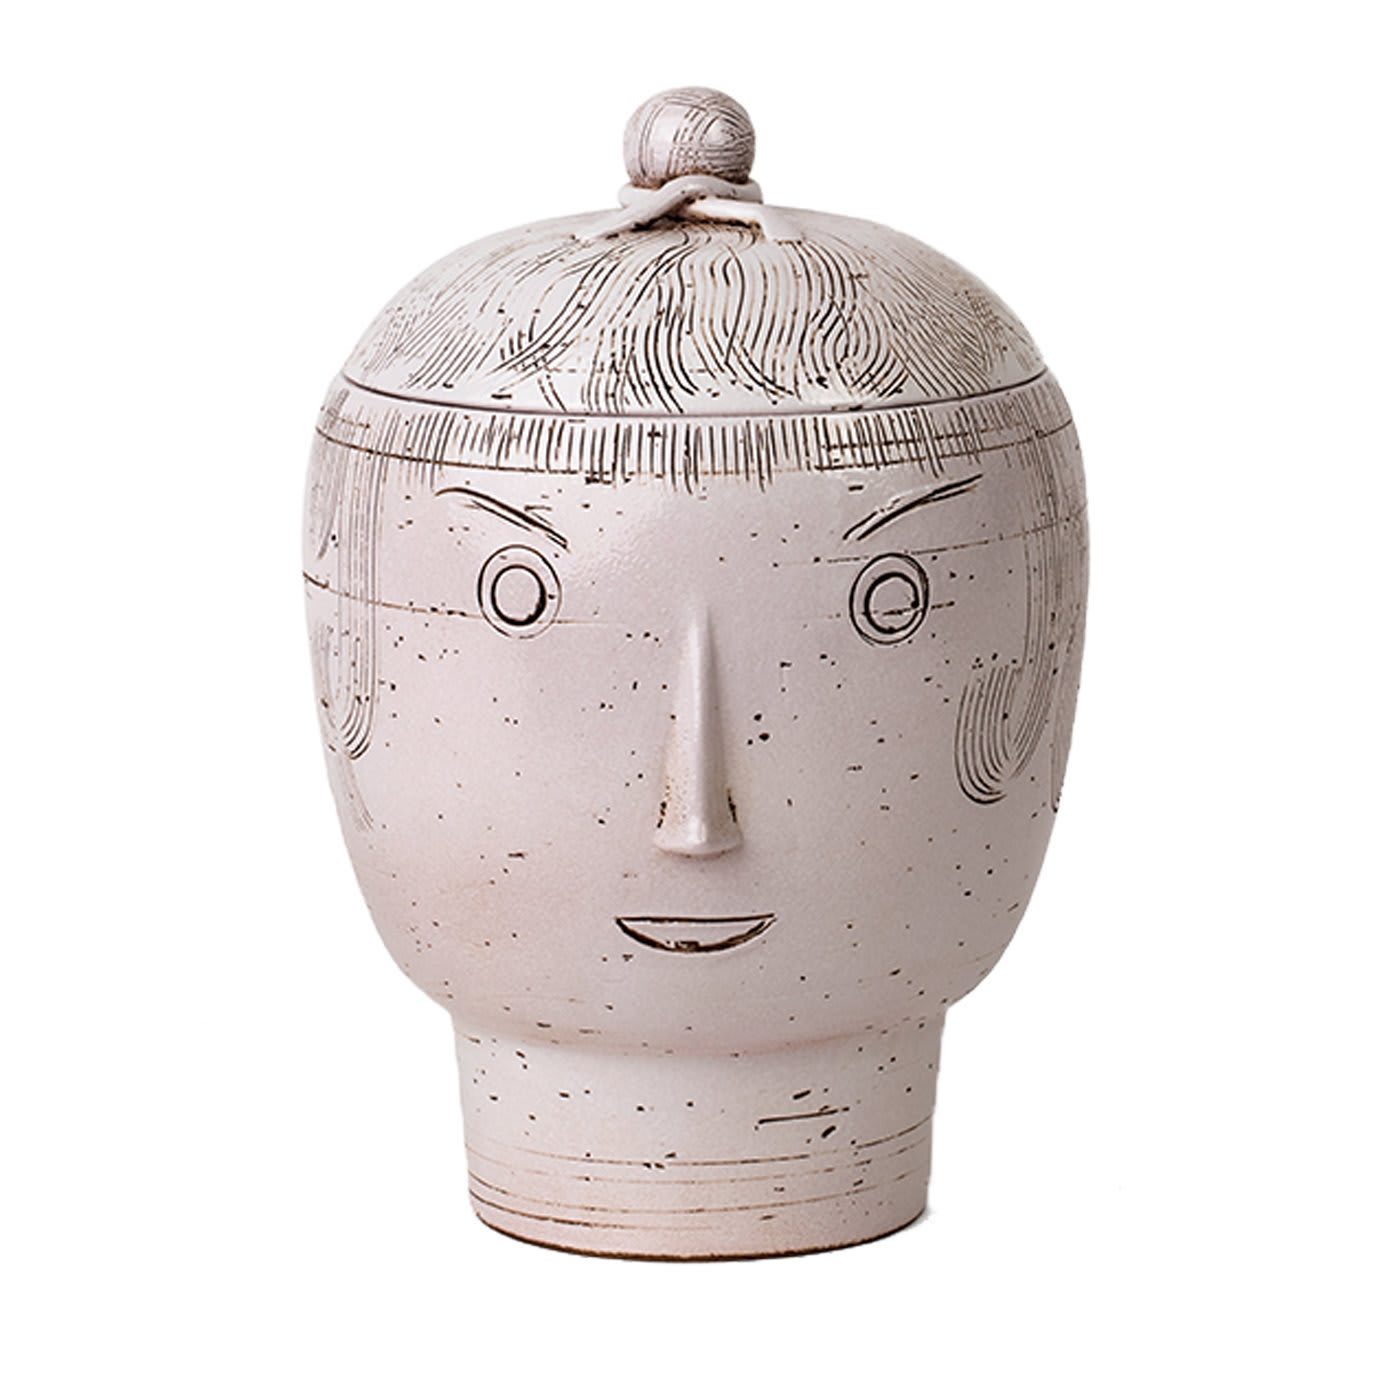 Anthropomorphic Off-White Vase with Lid by Aldo Londi - Bitossi Ceramiche